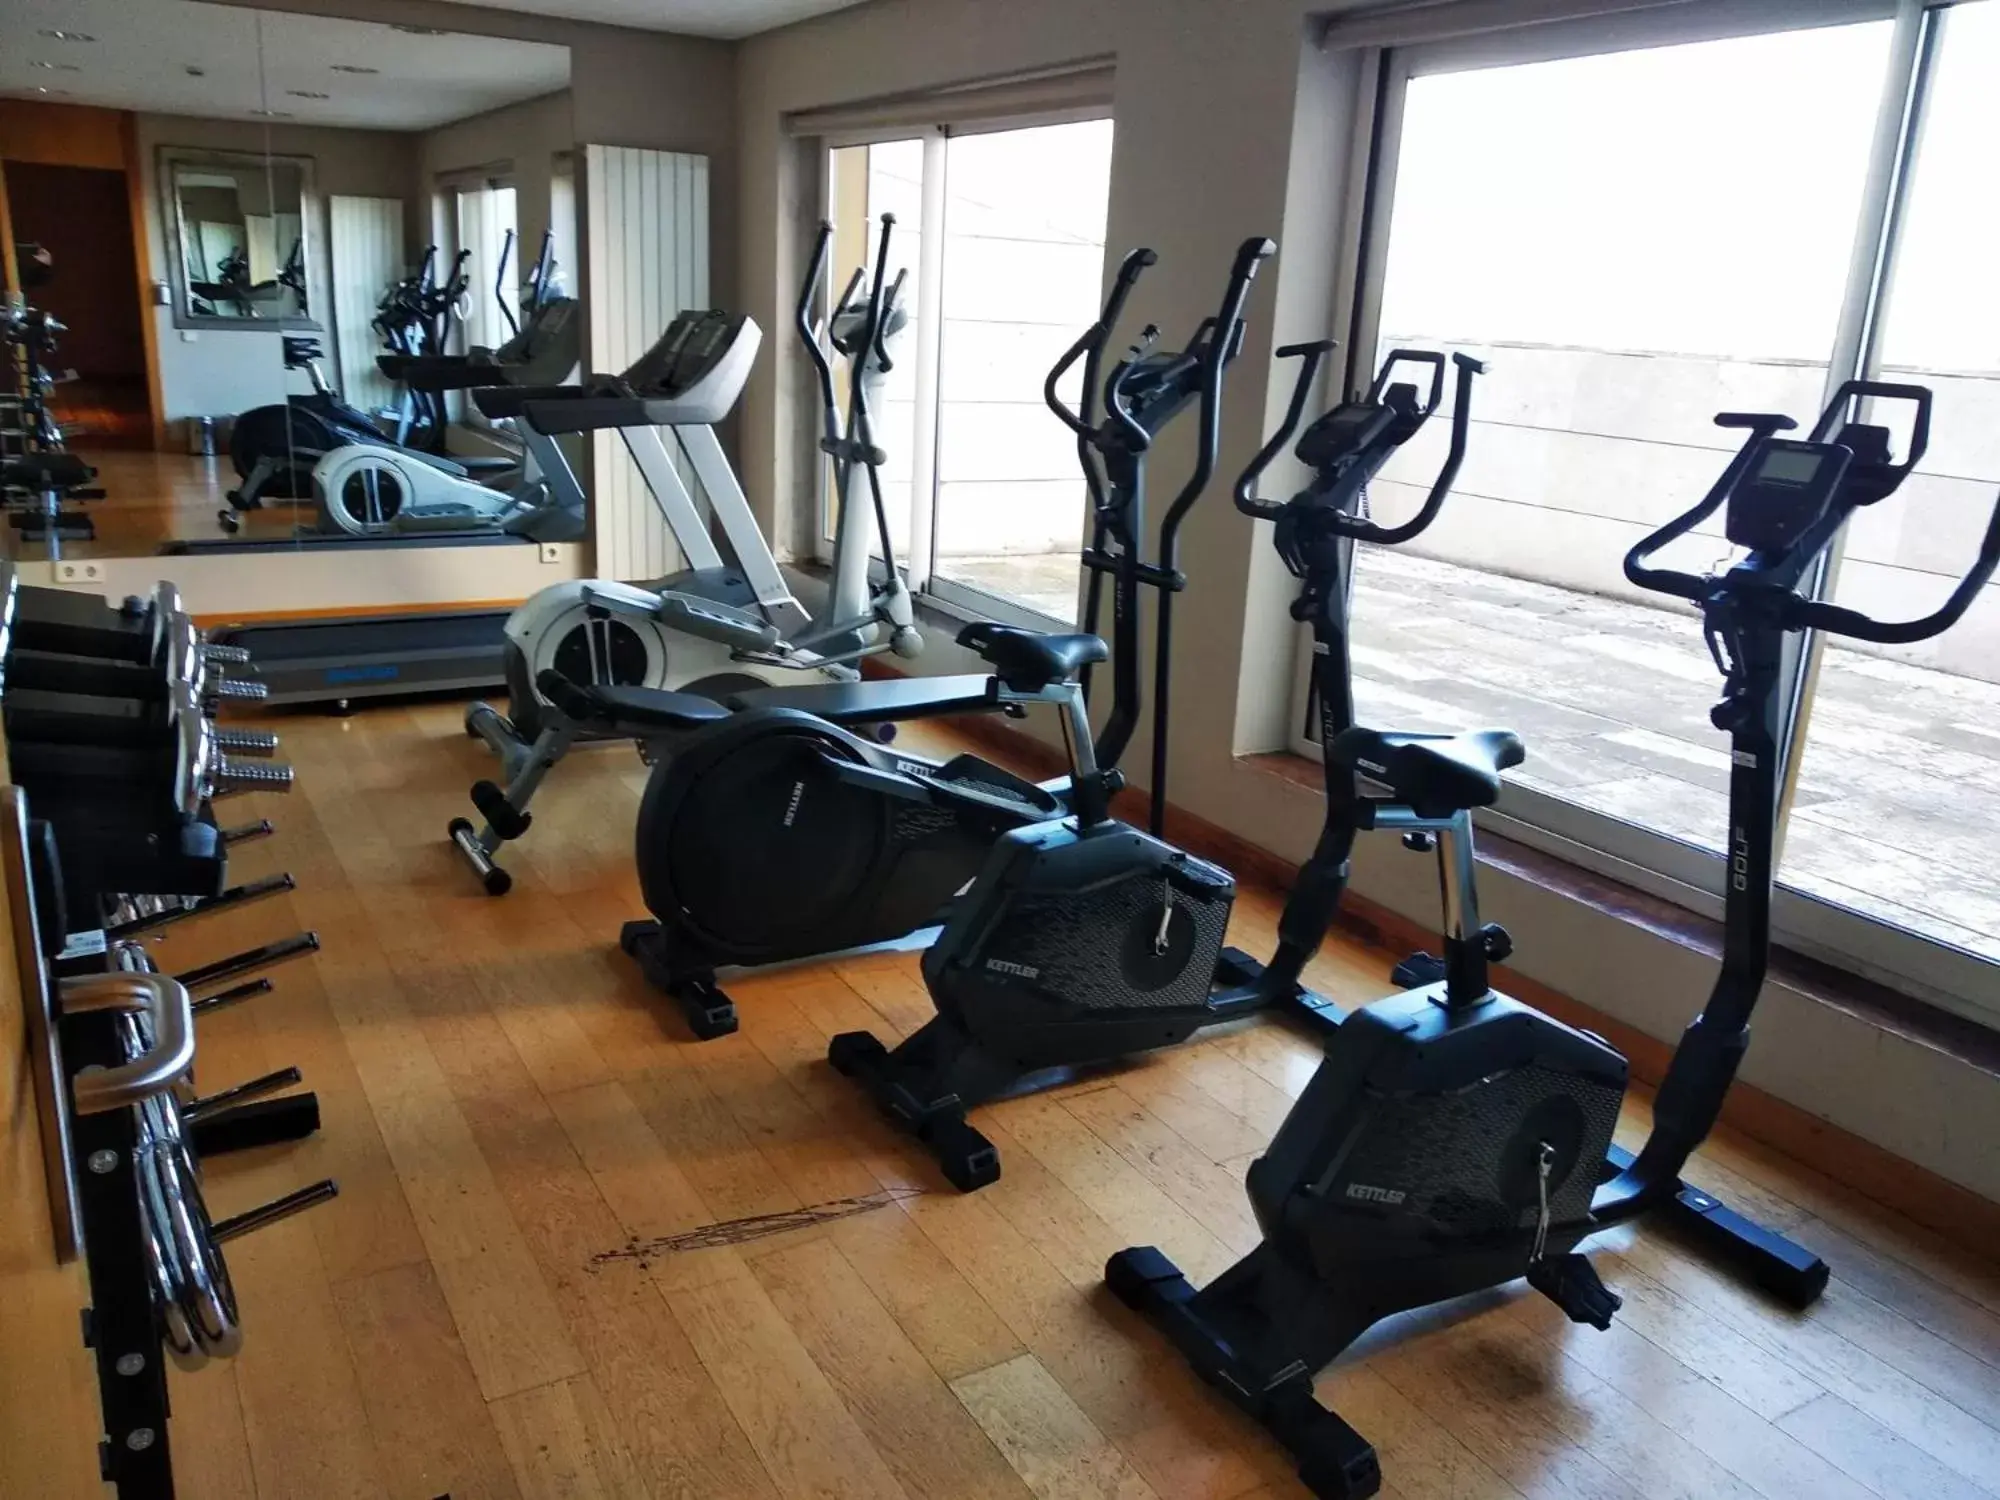 Fitness centre/facilities, Fitness Center/Facilities in Parador de Salamanca